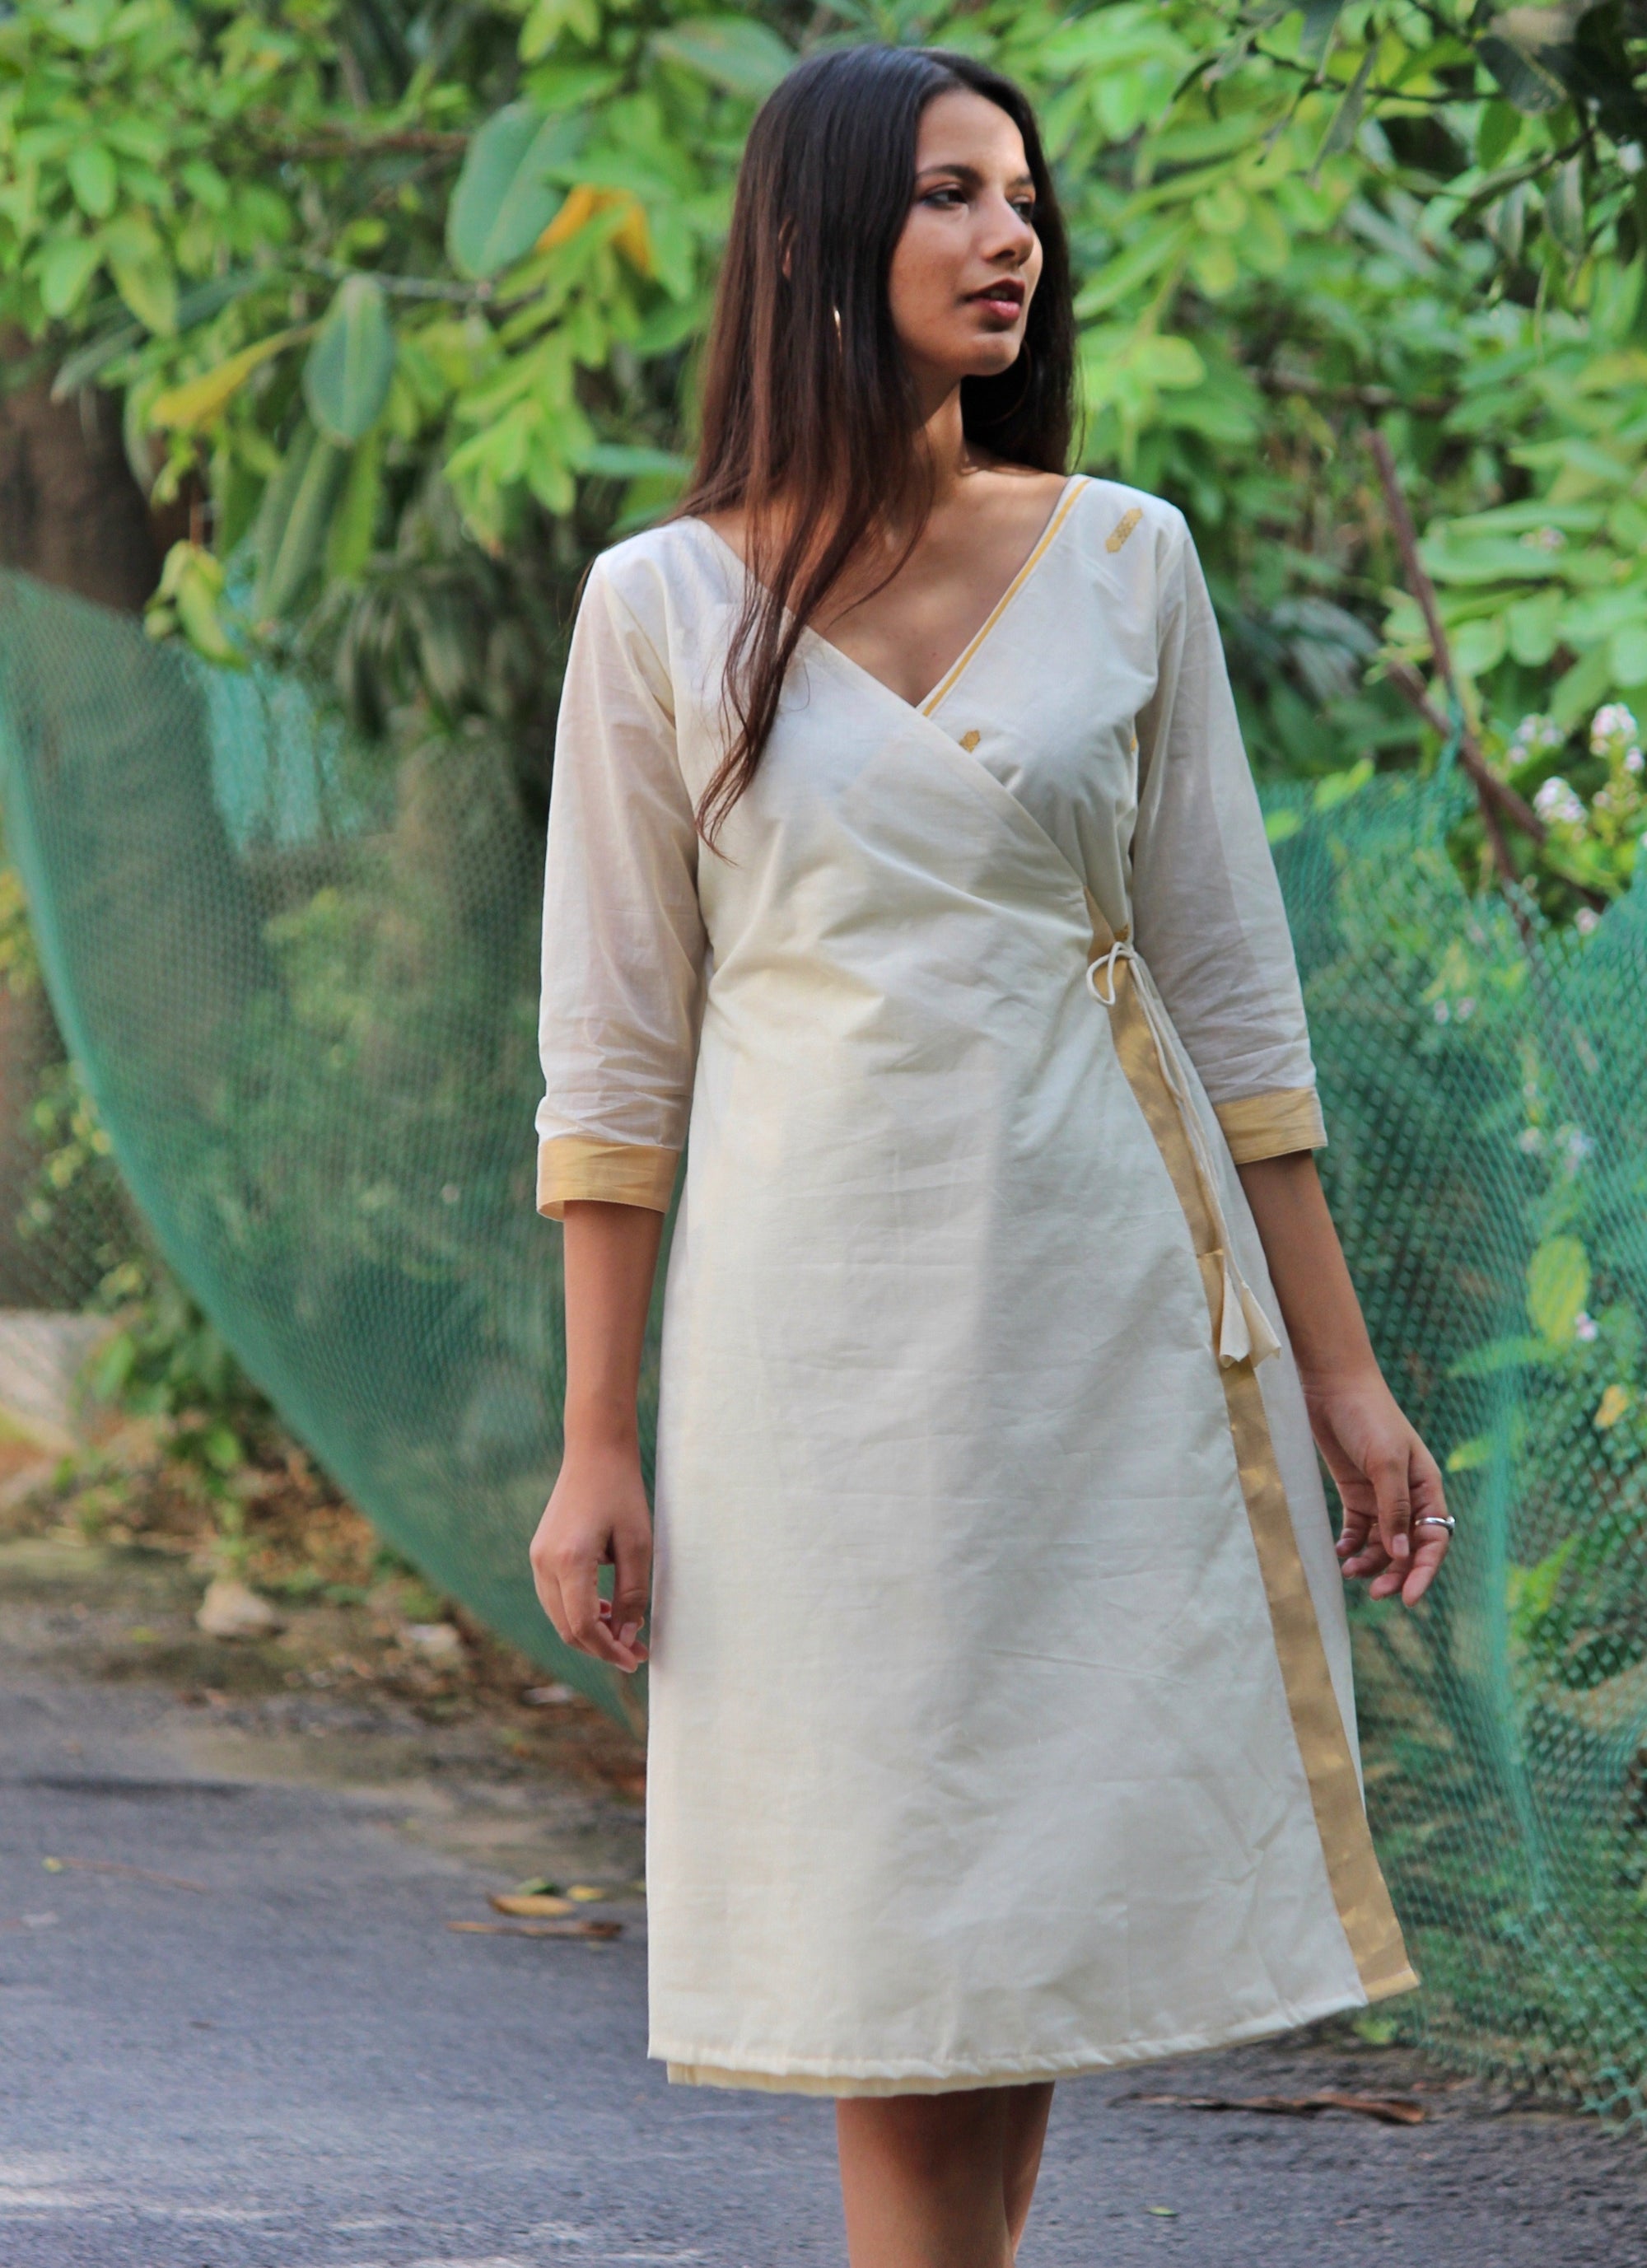 Sarvekshadesigns - Dress from old saree😉😉 New pattern New look | Facebook